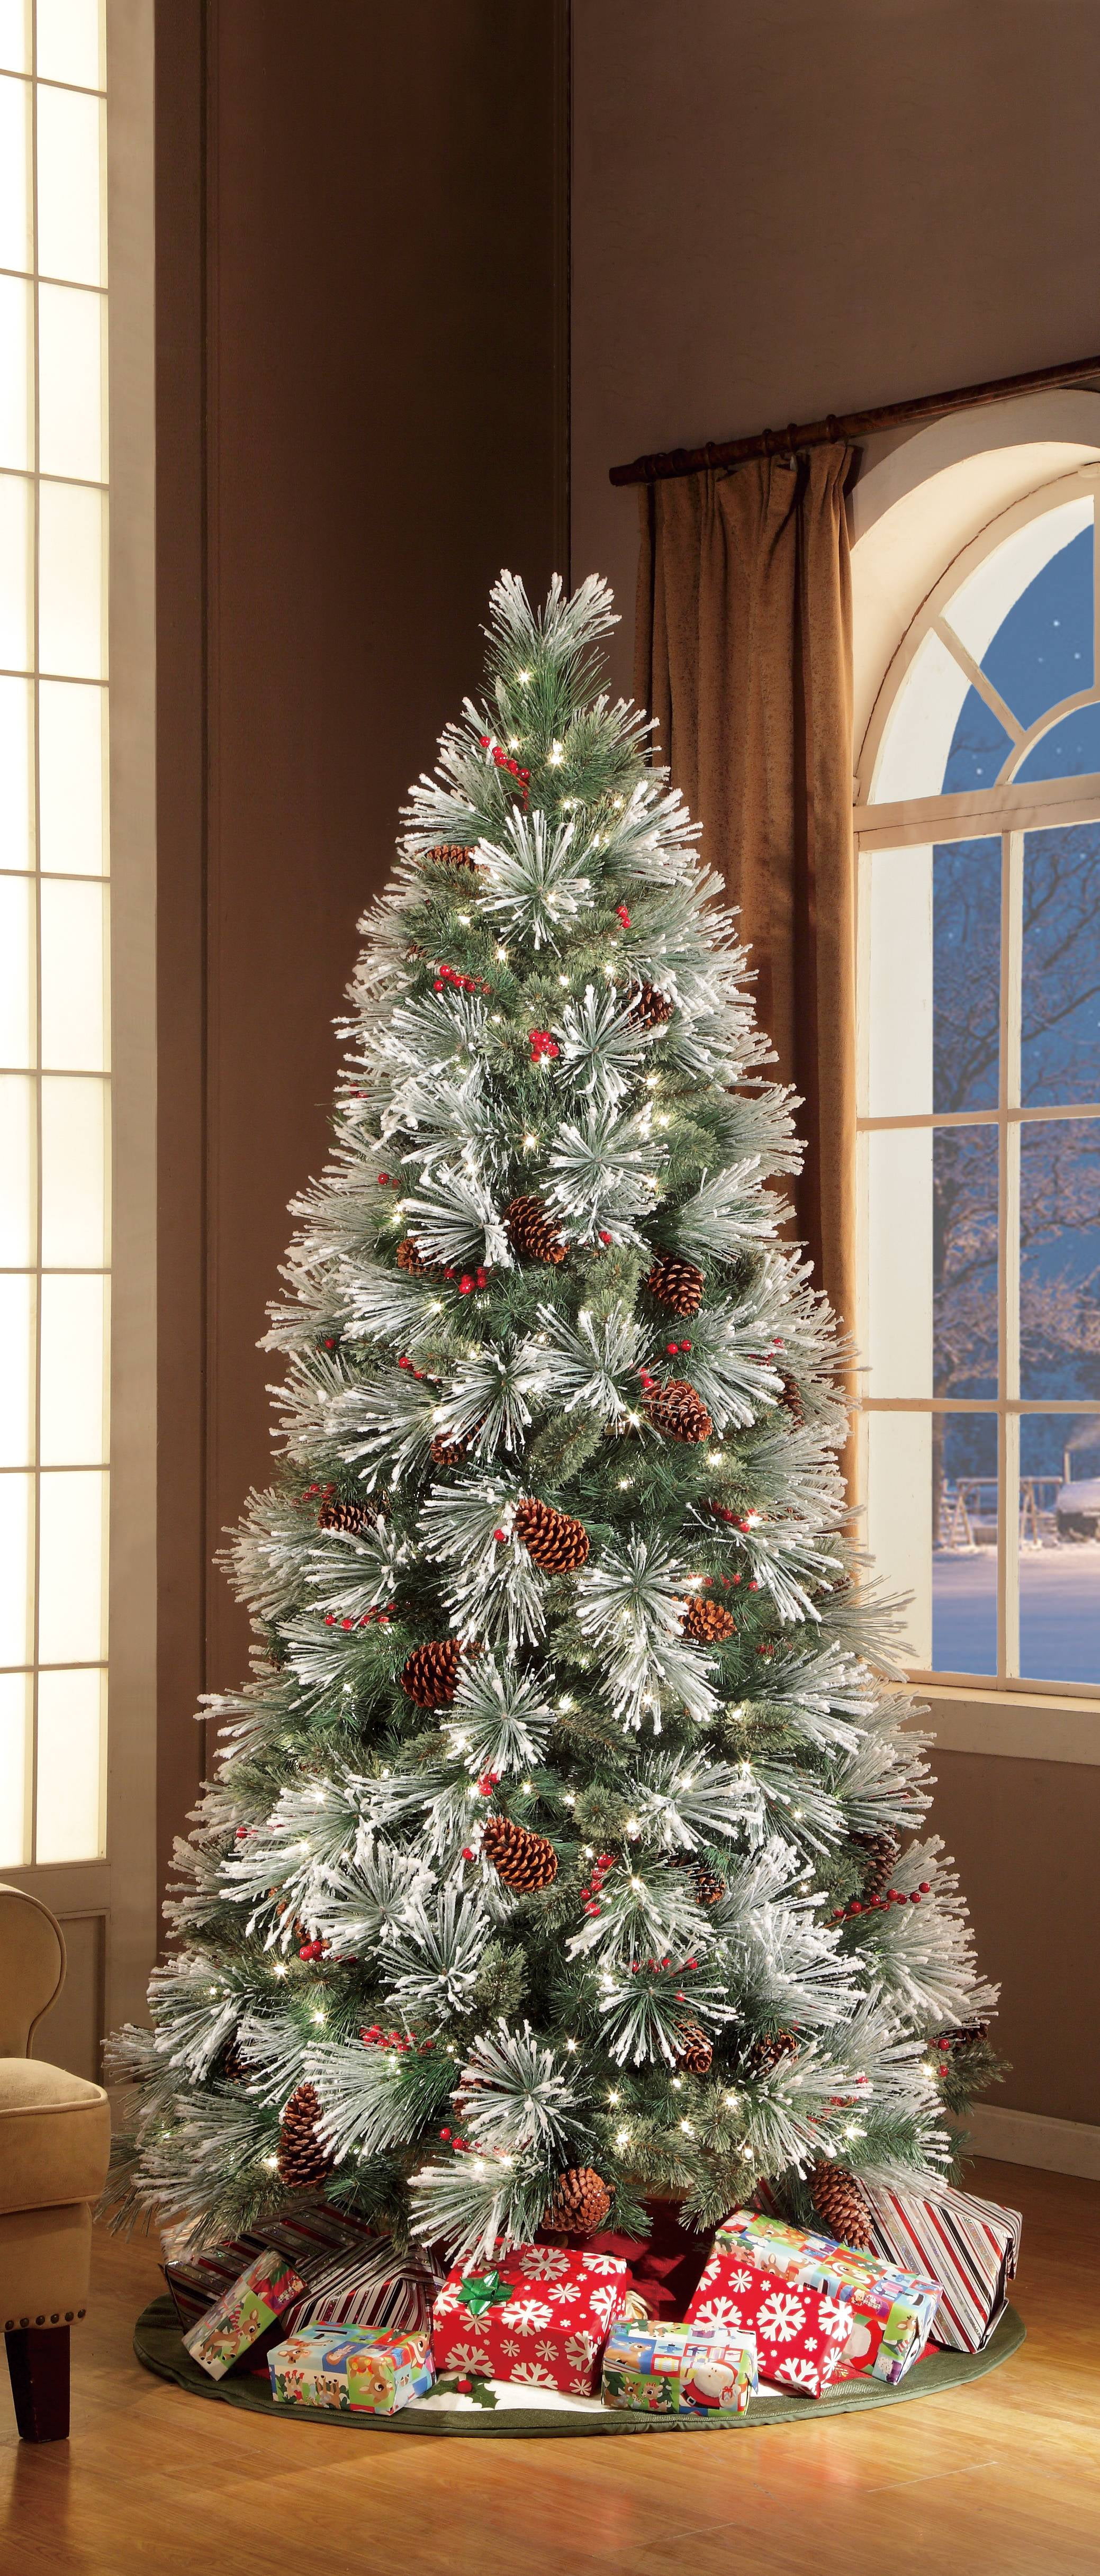 Minimalist Walmart Christmas Trees with Simple Decor